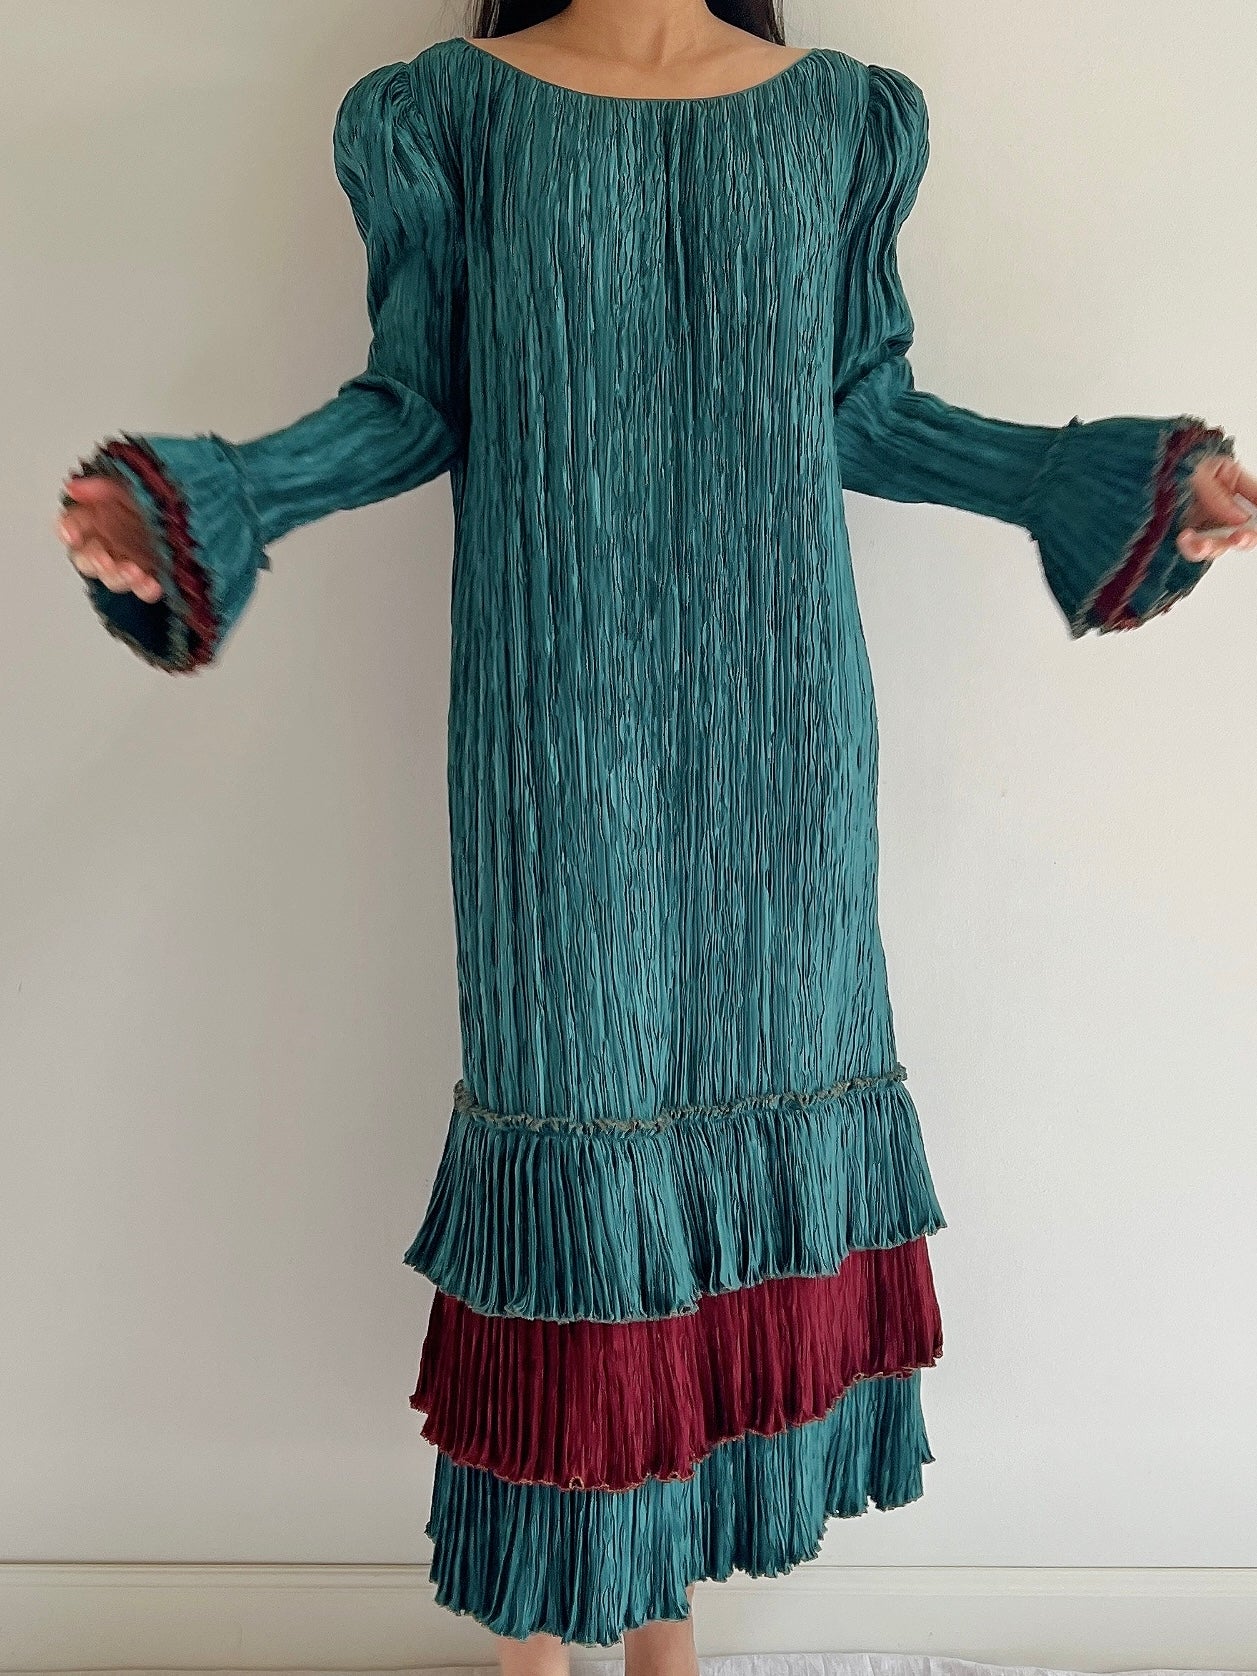 Vintage Mary McFadden Teal Layered Dress - M/L